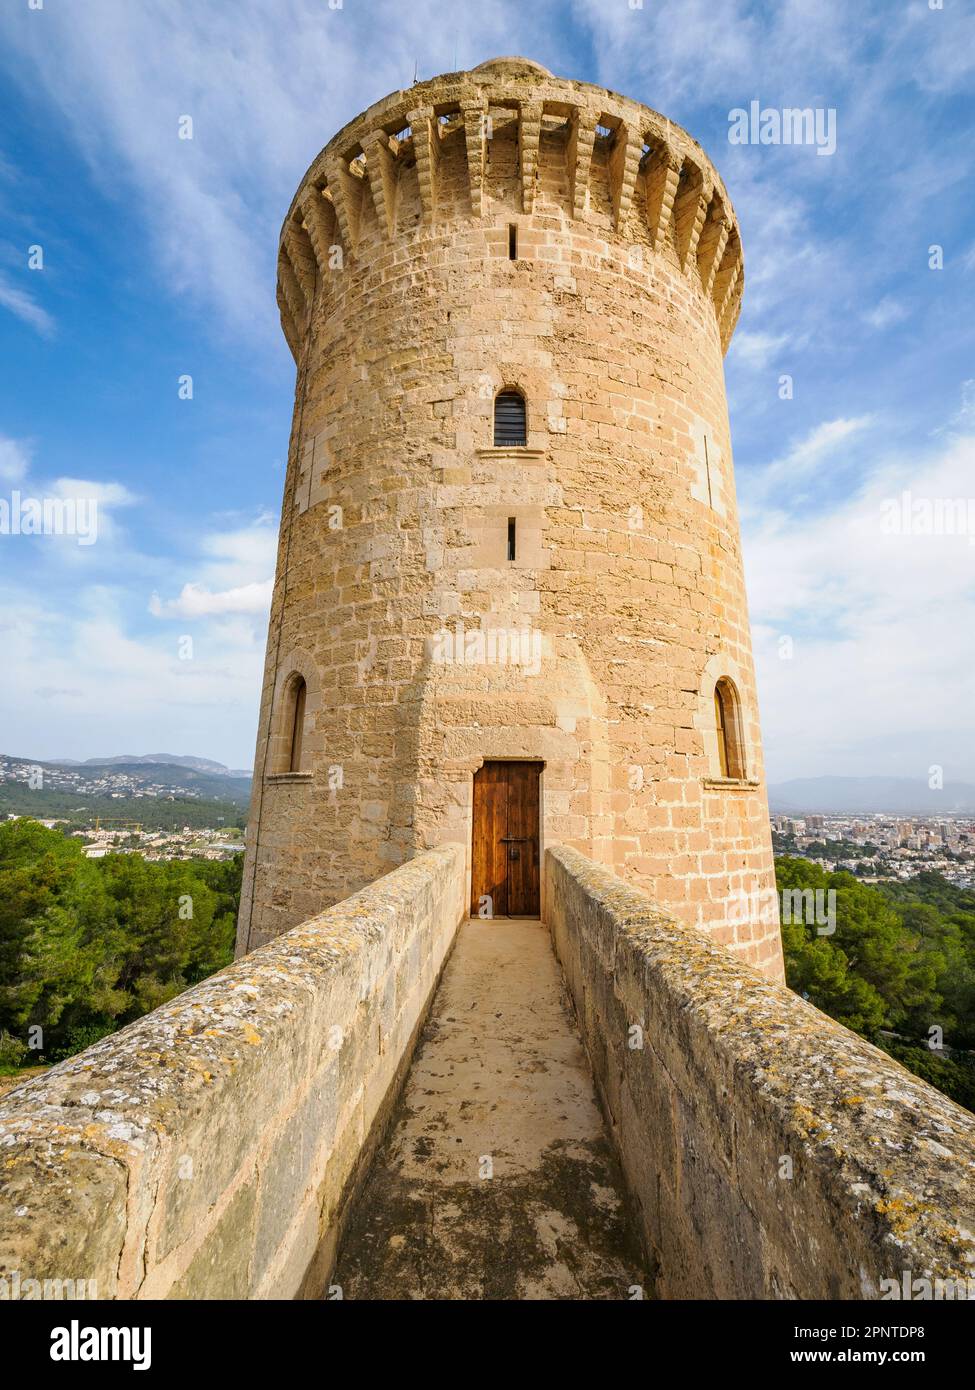 Donjon tower of Bellver Castle the Castillo de Bellver high on a hill overlooking Palma de Majorca in the Balearic Islands of Spain Stock Photo